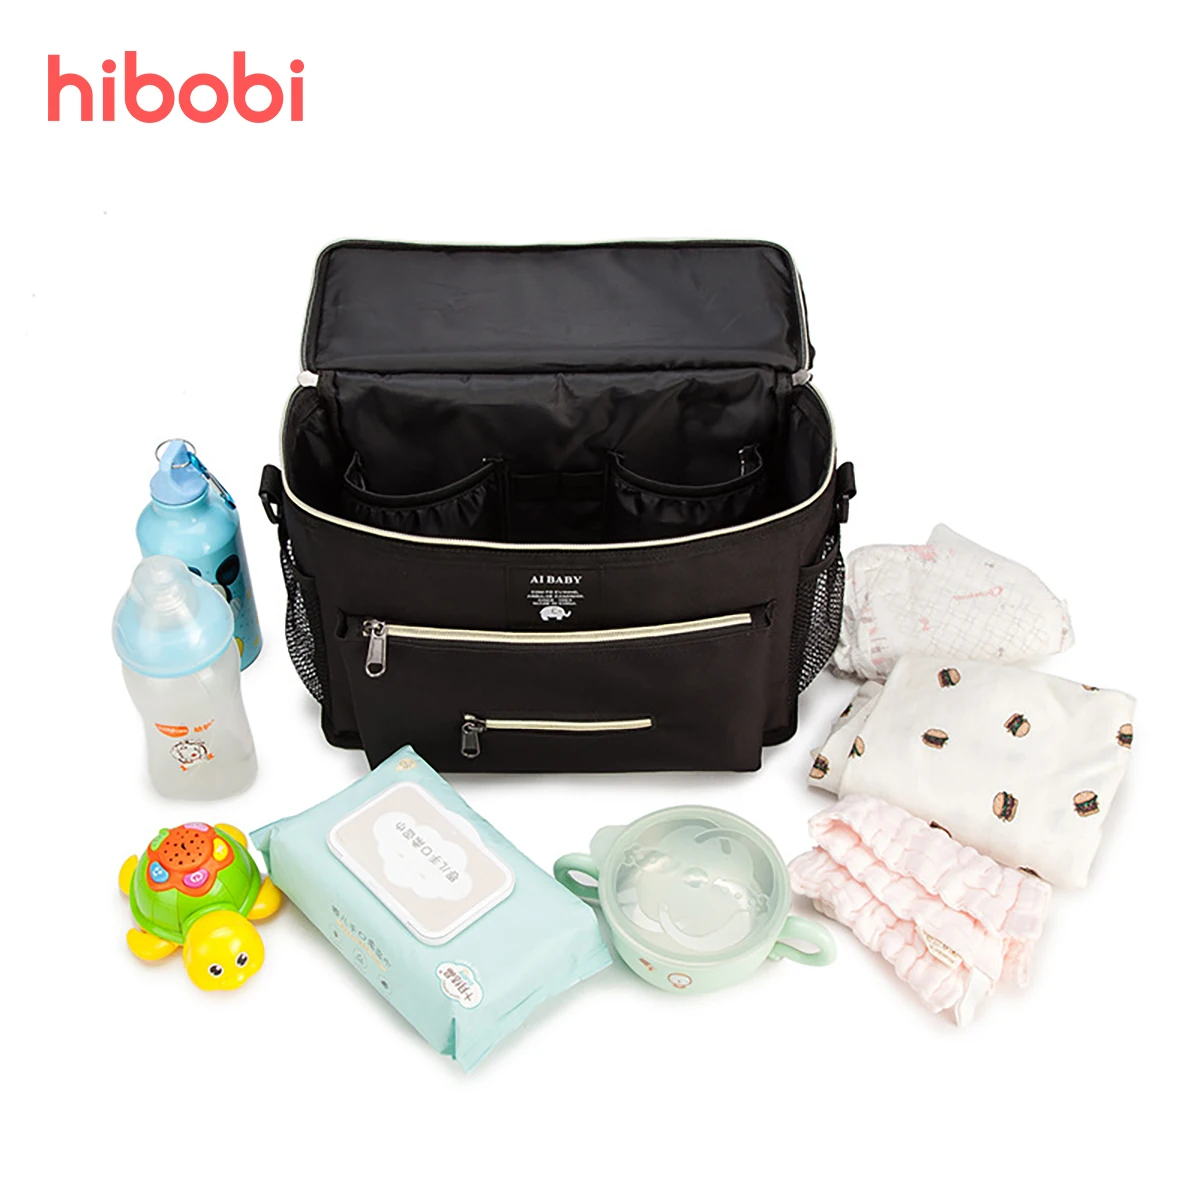 hibobi Waterproof Mummy Bag Oxford Diaper Bag Large Capacity Mommy Travel Bag Maternity Mother Baby Stroller Bags Organizer